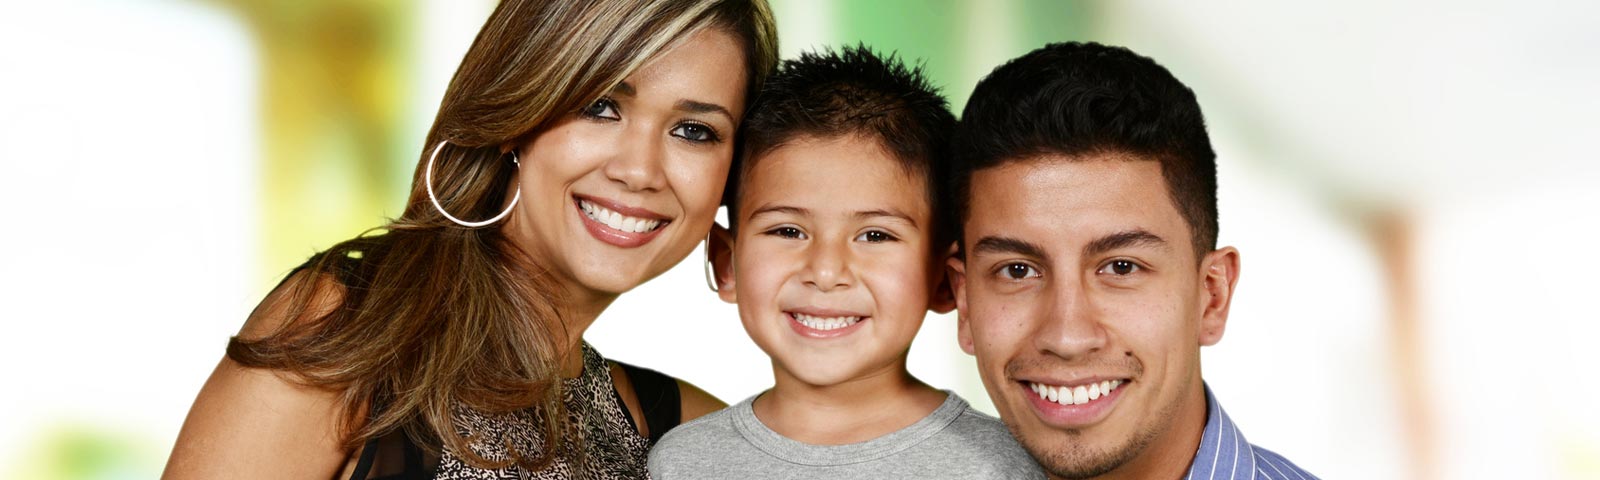 hispanic family smiling